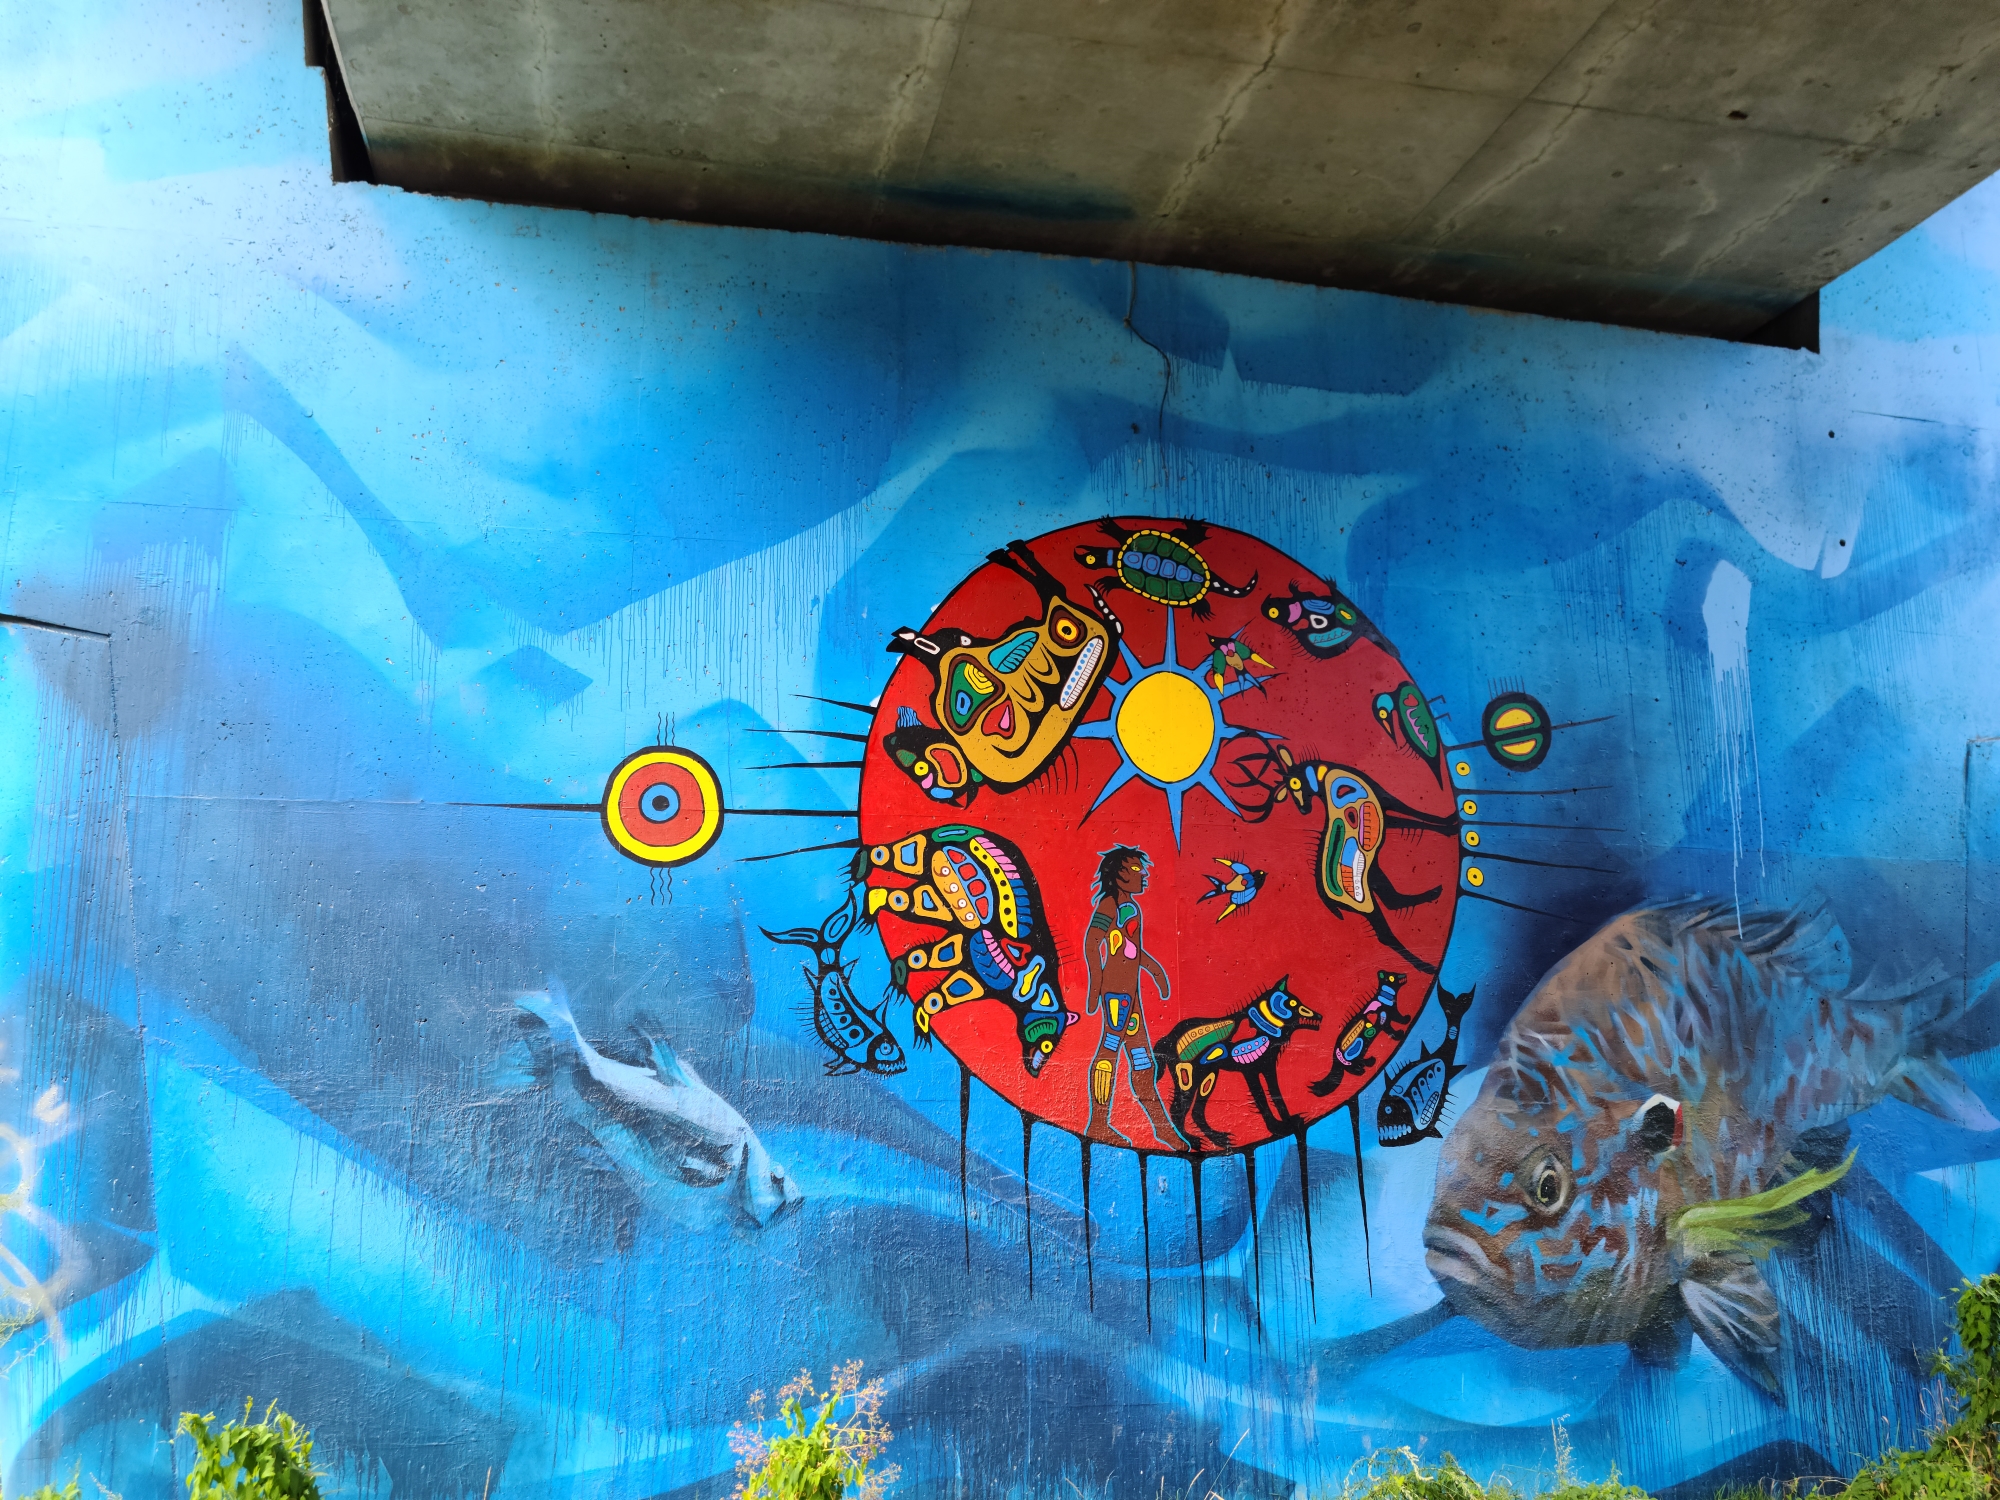 Indigenous murals, Indigenous art in Humber Park under Old Mill subway bridge in Toronto